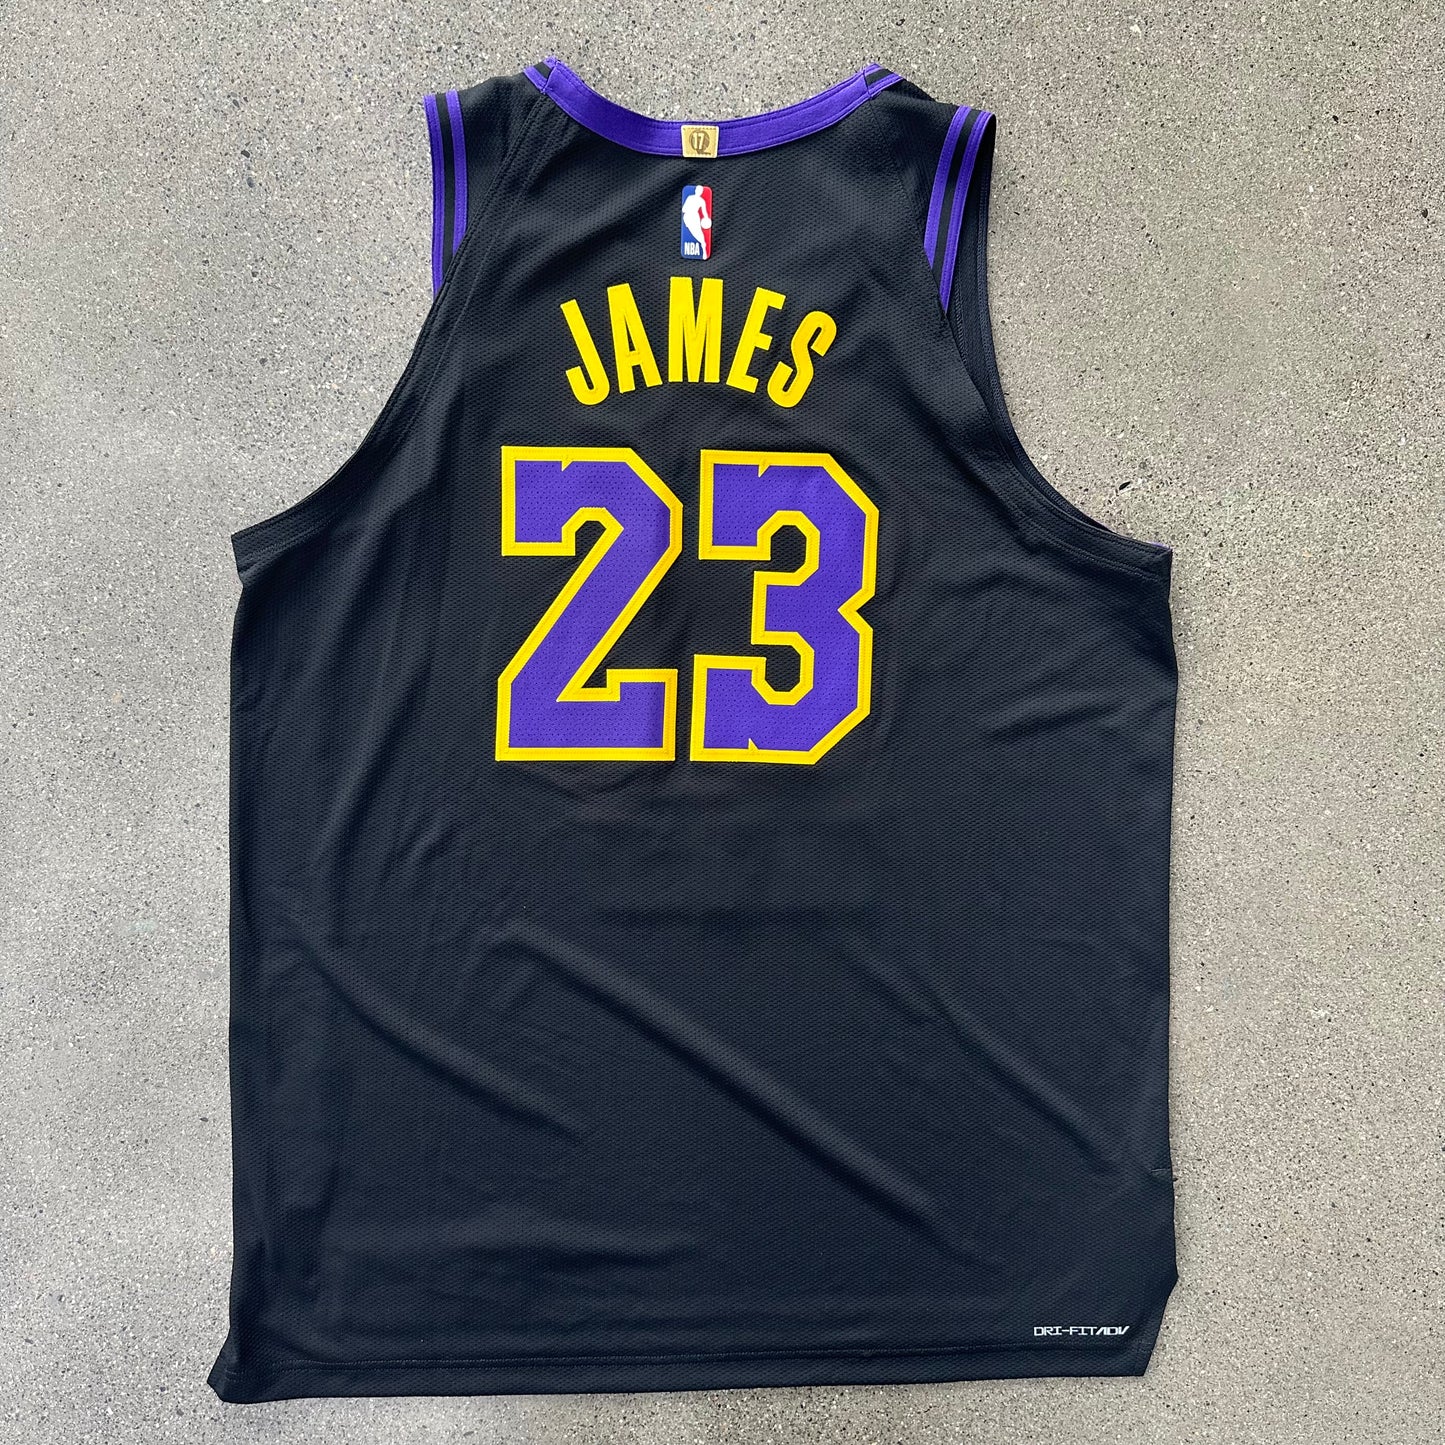 LeBron James City Edition Lakers Jersey SZ XL (NEW)